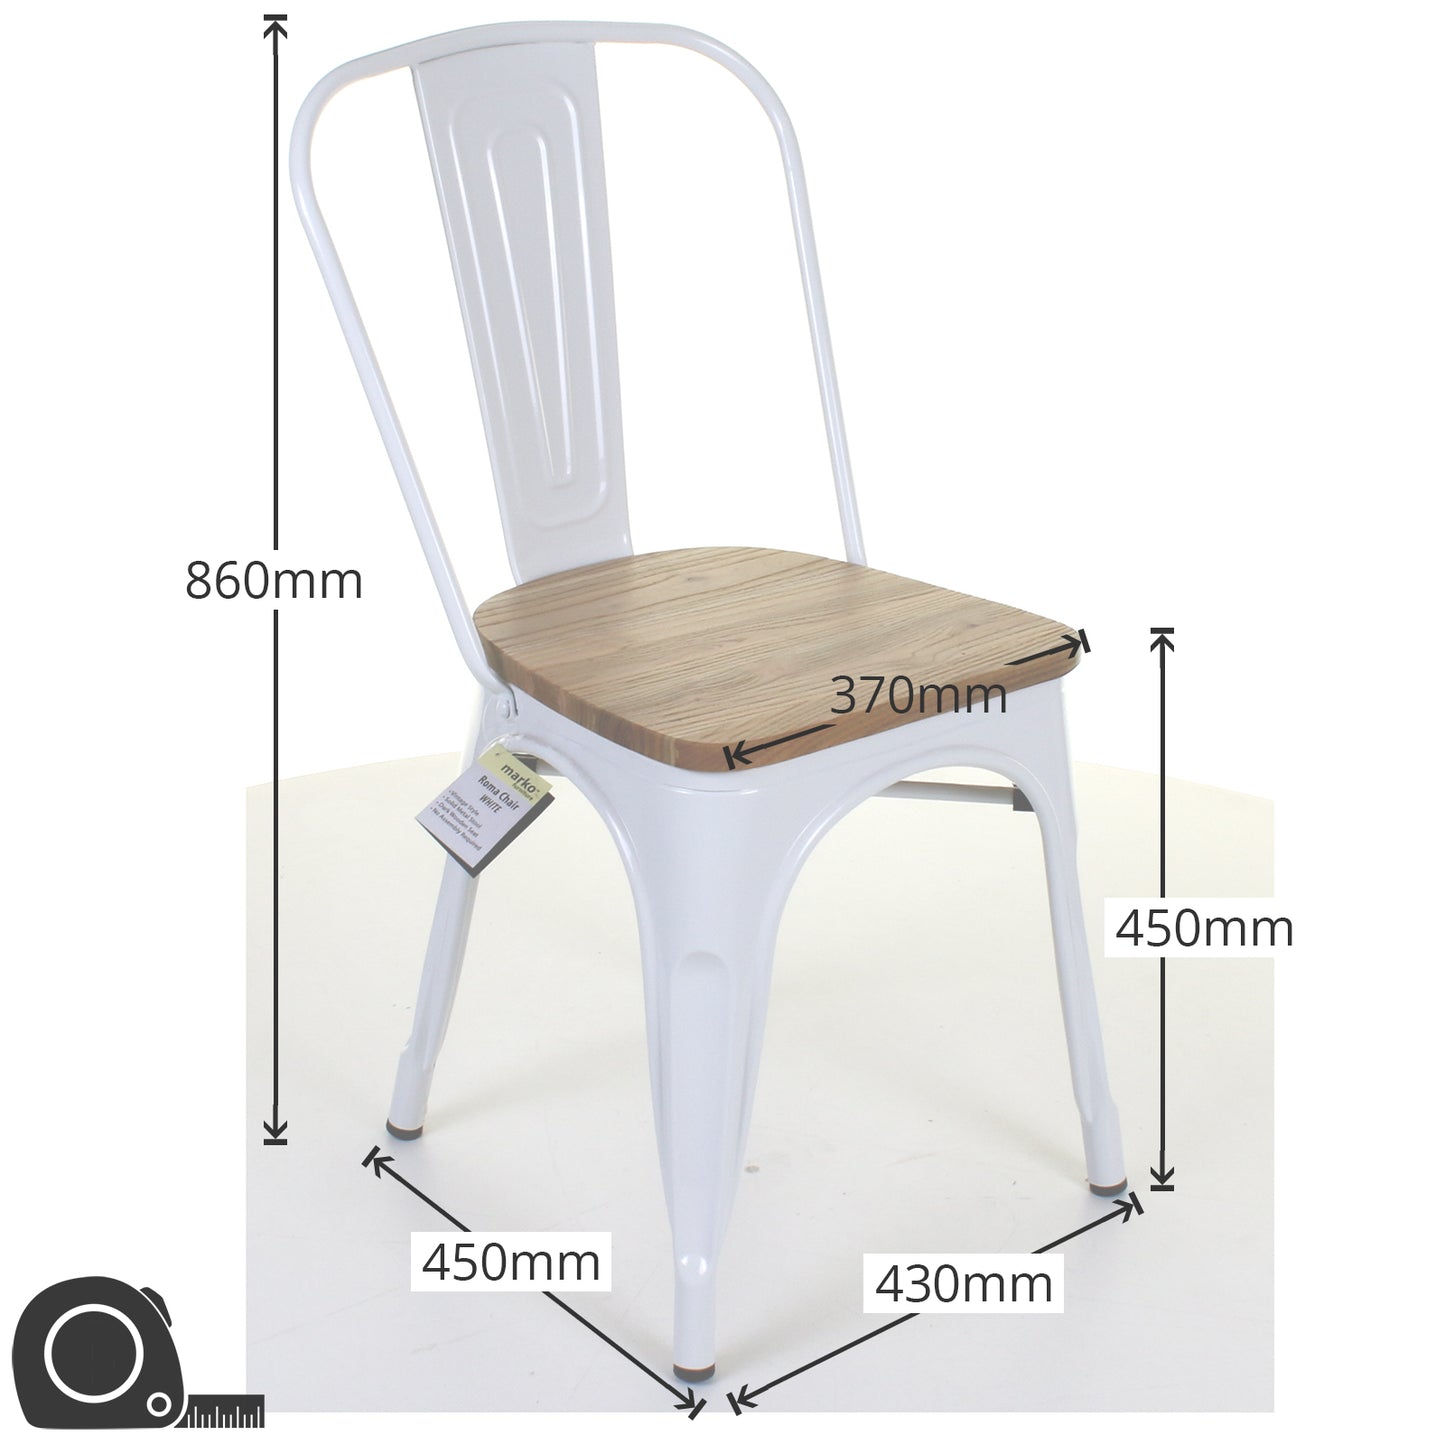 5PC Prato Table & 4 Palermo Chairs Set - White